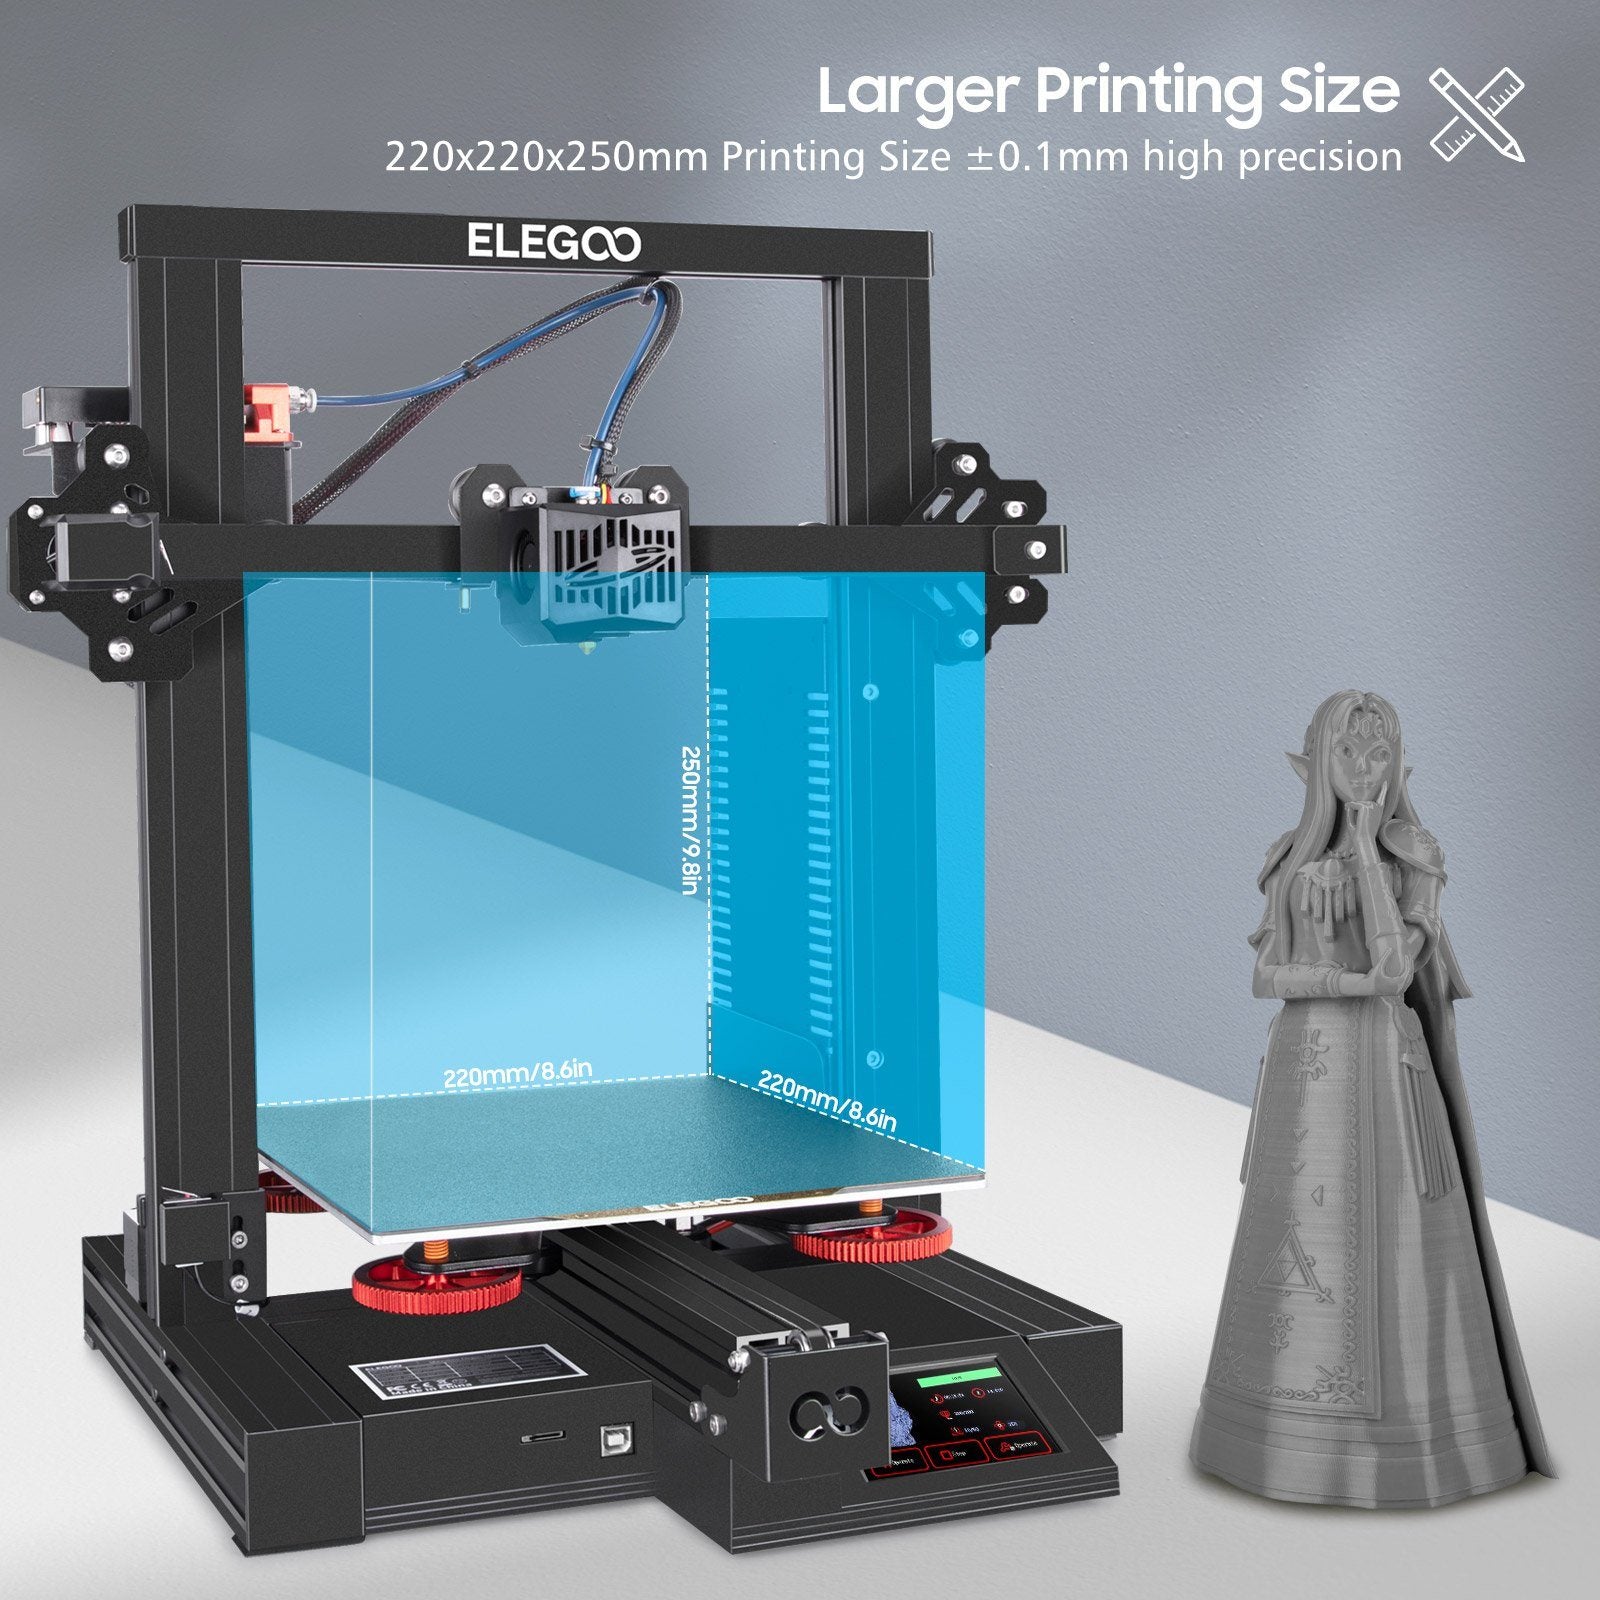 【new】elegoo Neptune 2s Fdm 3d Printer With Larger Printer Size 220 220 250mm